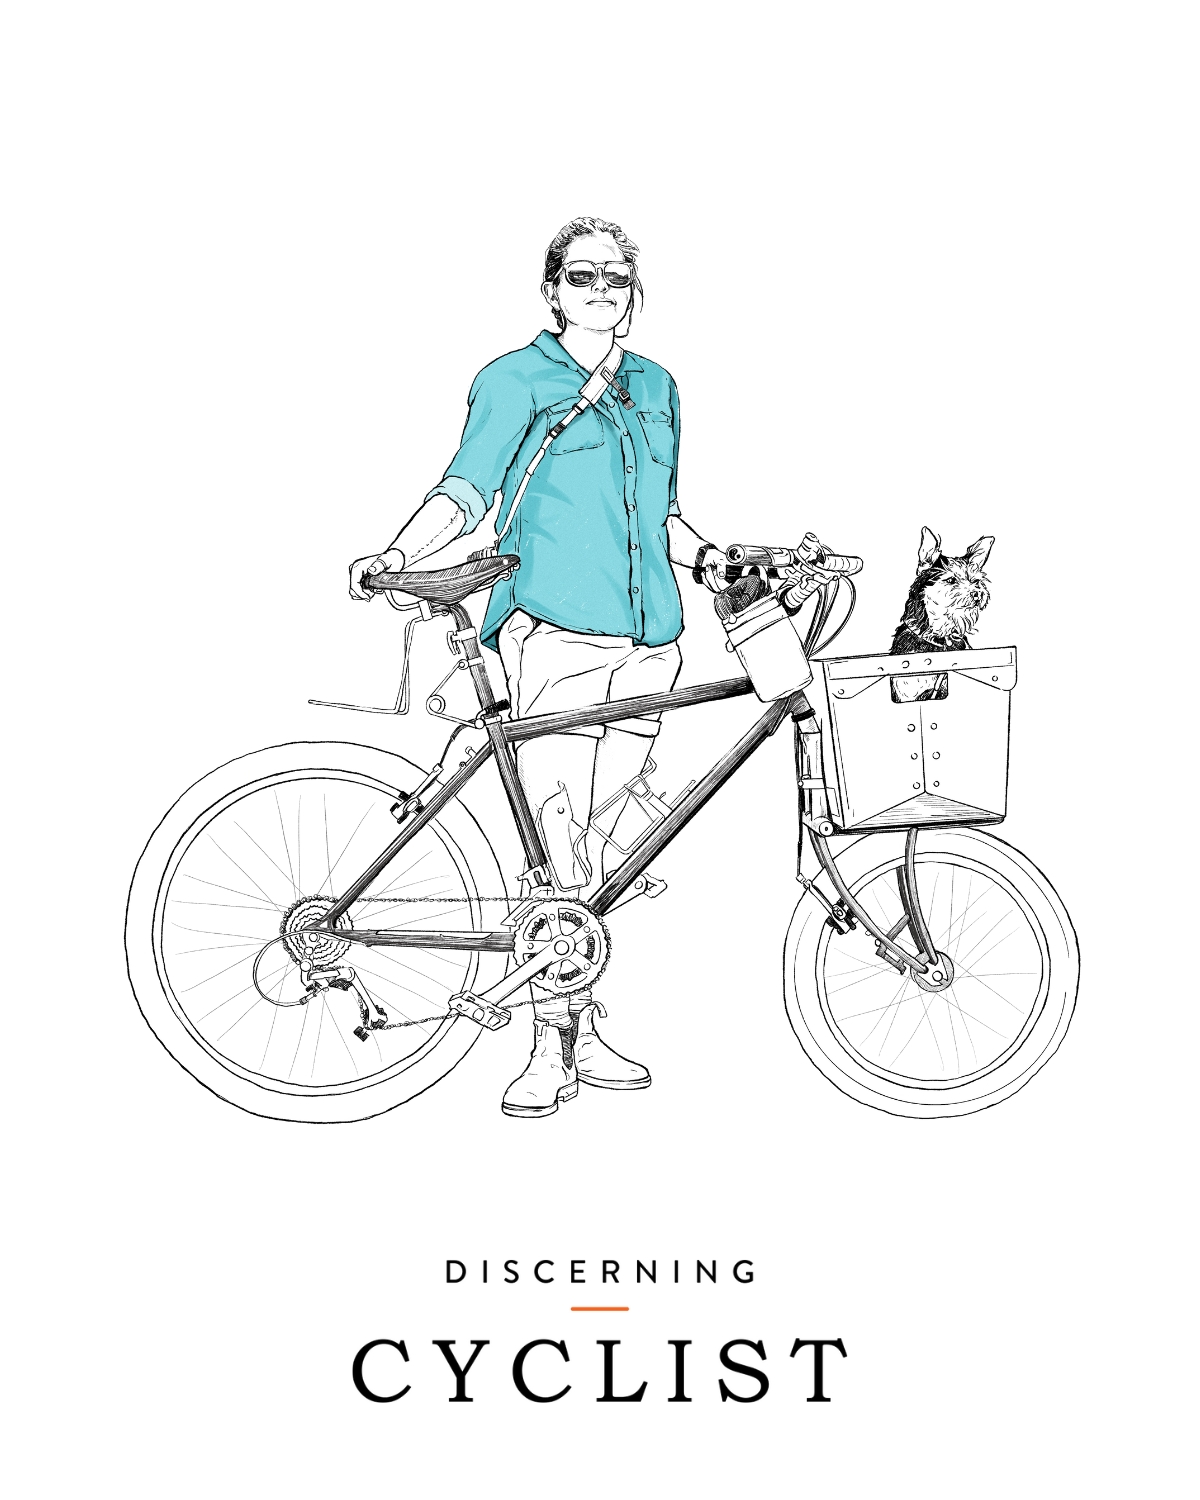 Cyclist with dog illustration